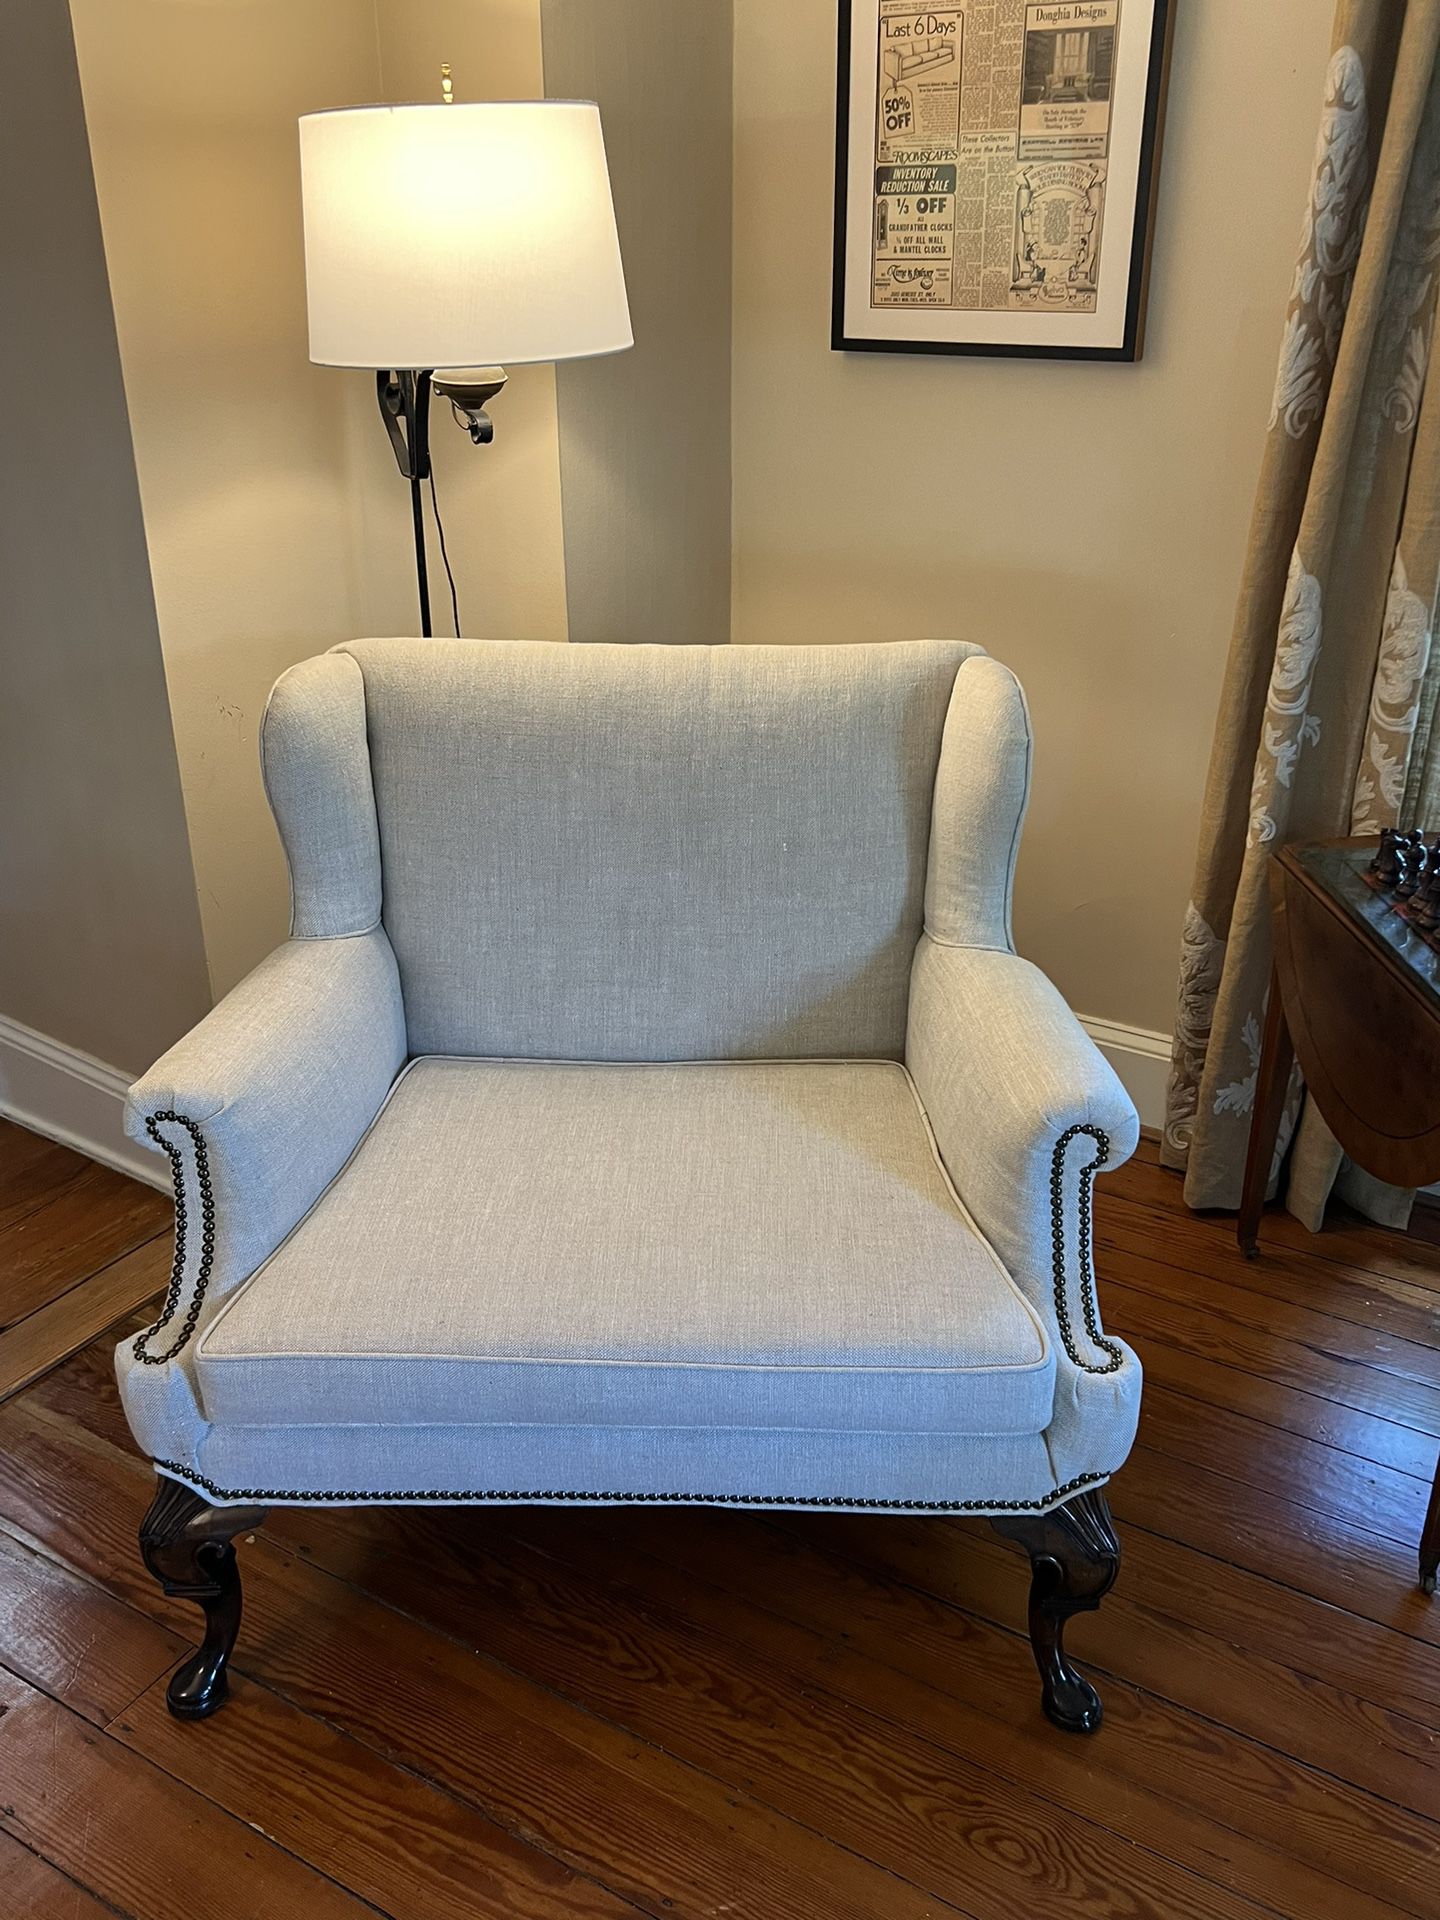 Circa 1700’s Wingback Chair, Restoration Hardware Fabric